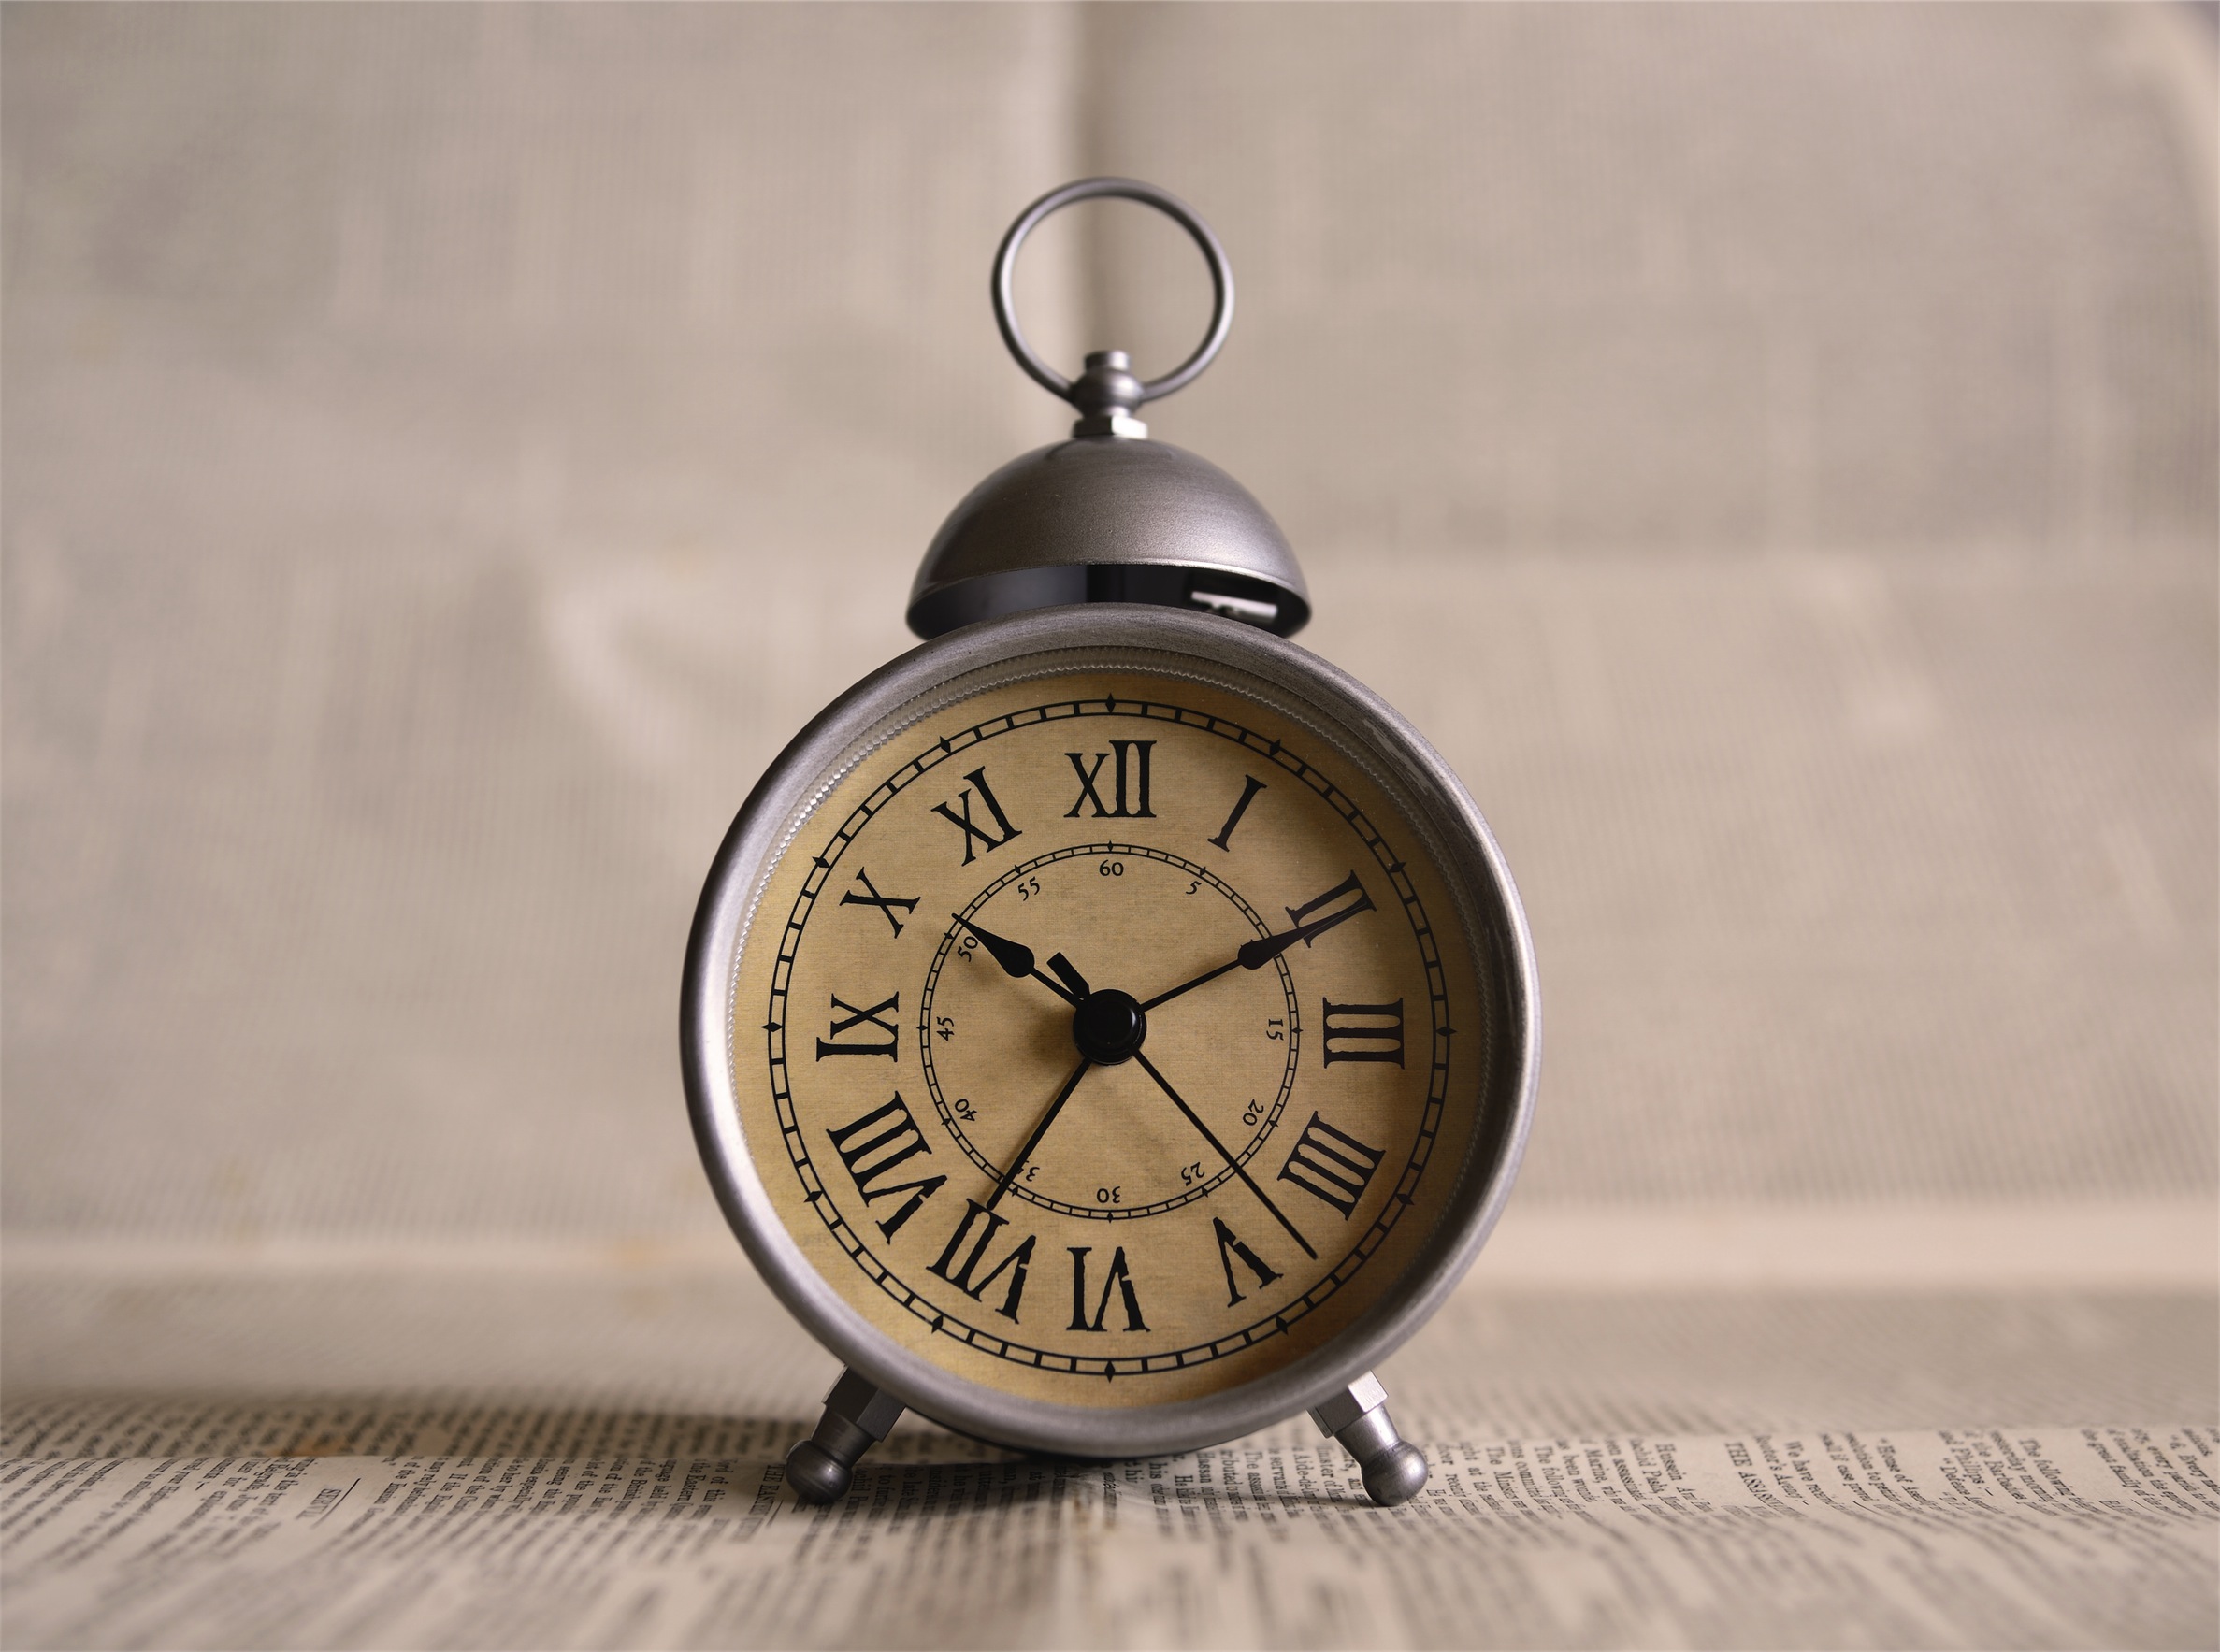 Vintage Alarm Clock_Ales Krivec_Stocksnap